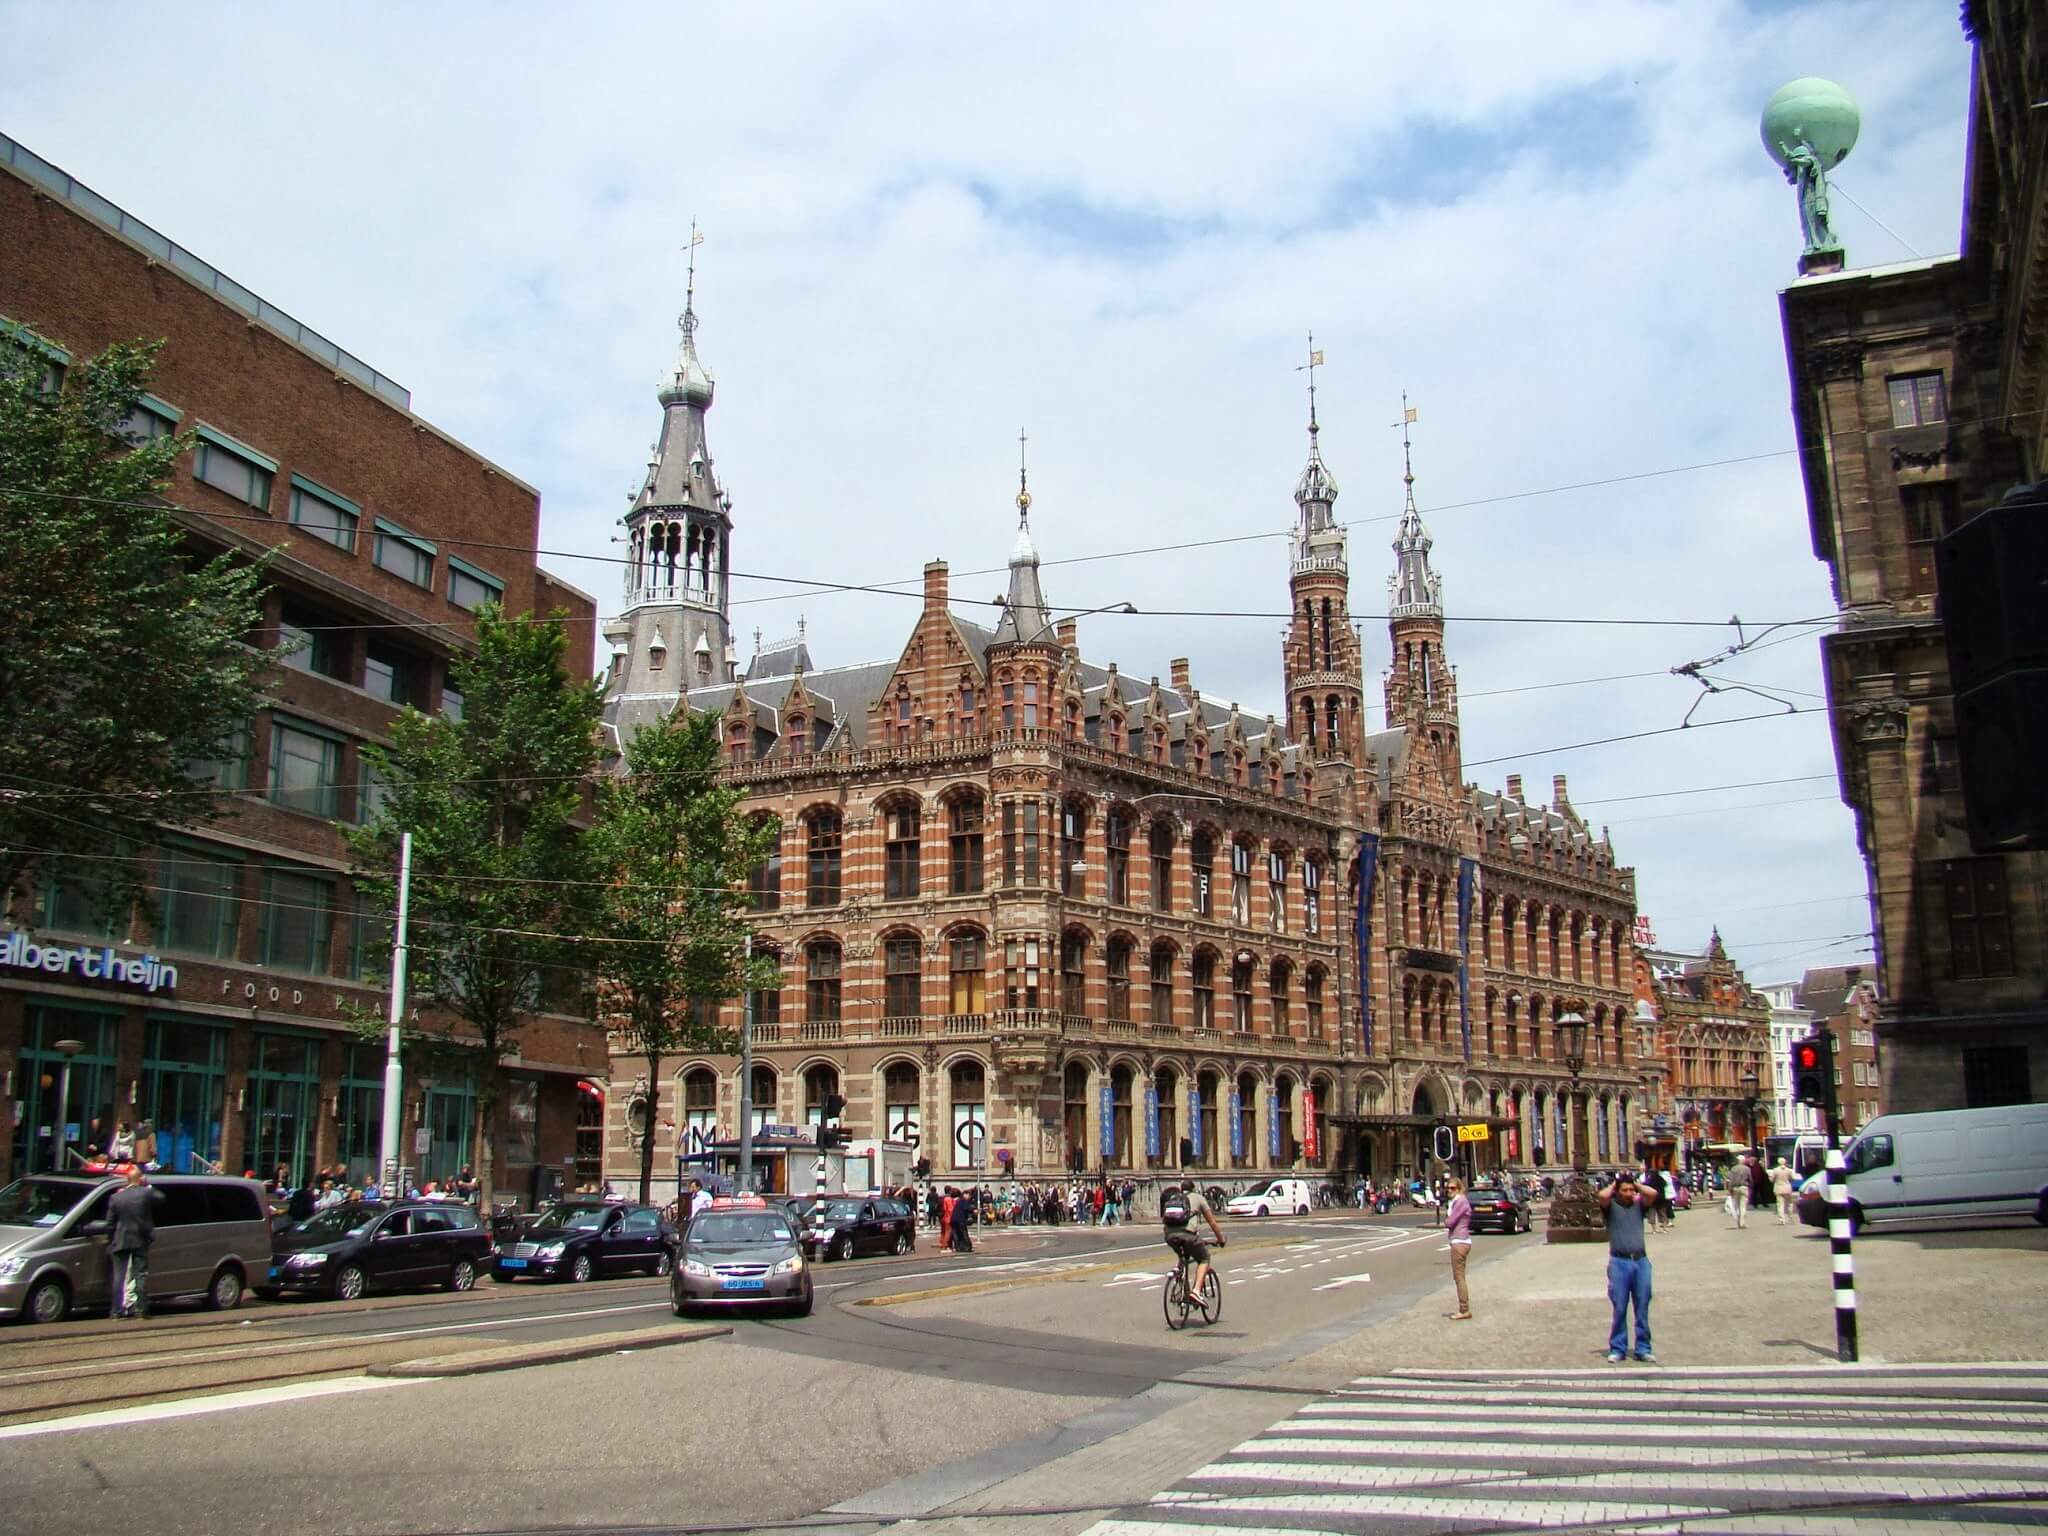 Amazing architecture in Amsterdam